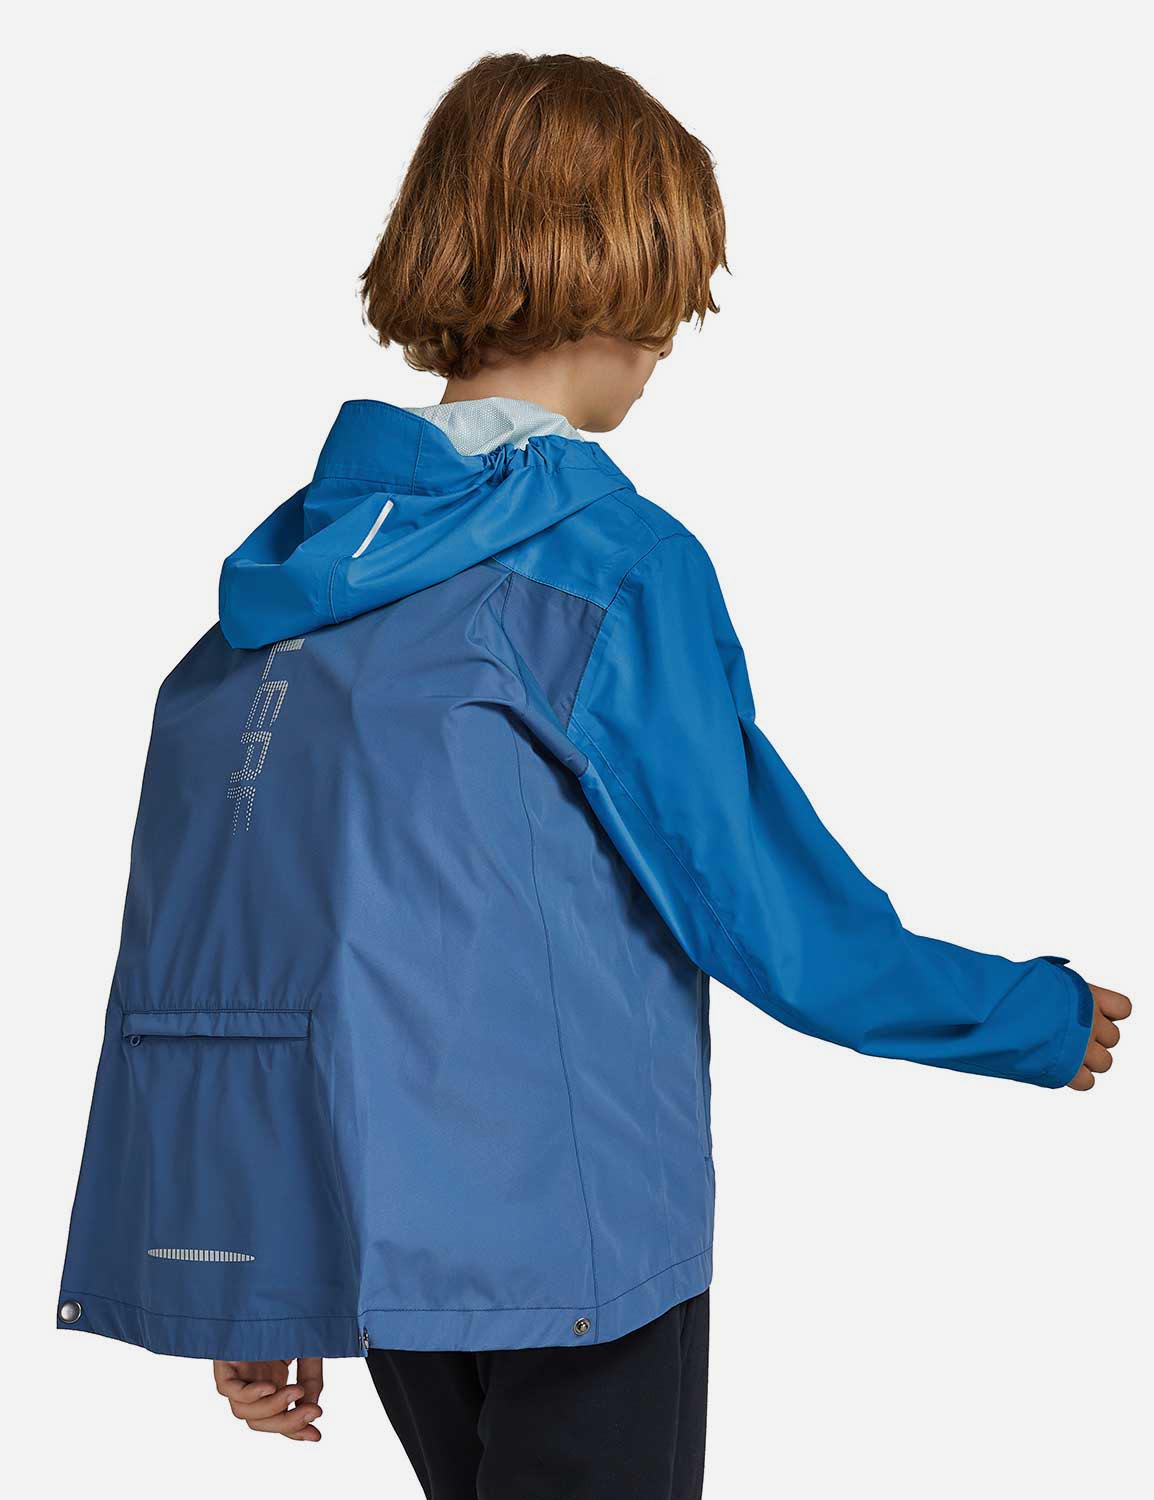 Baleaf Kid's Waterproof Outdoor Hooded Cycling Rain Jacket cai037 Navy/Blue Back Detail